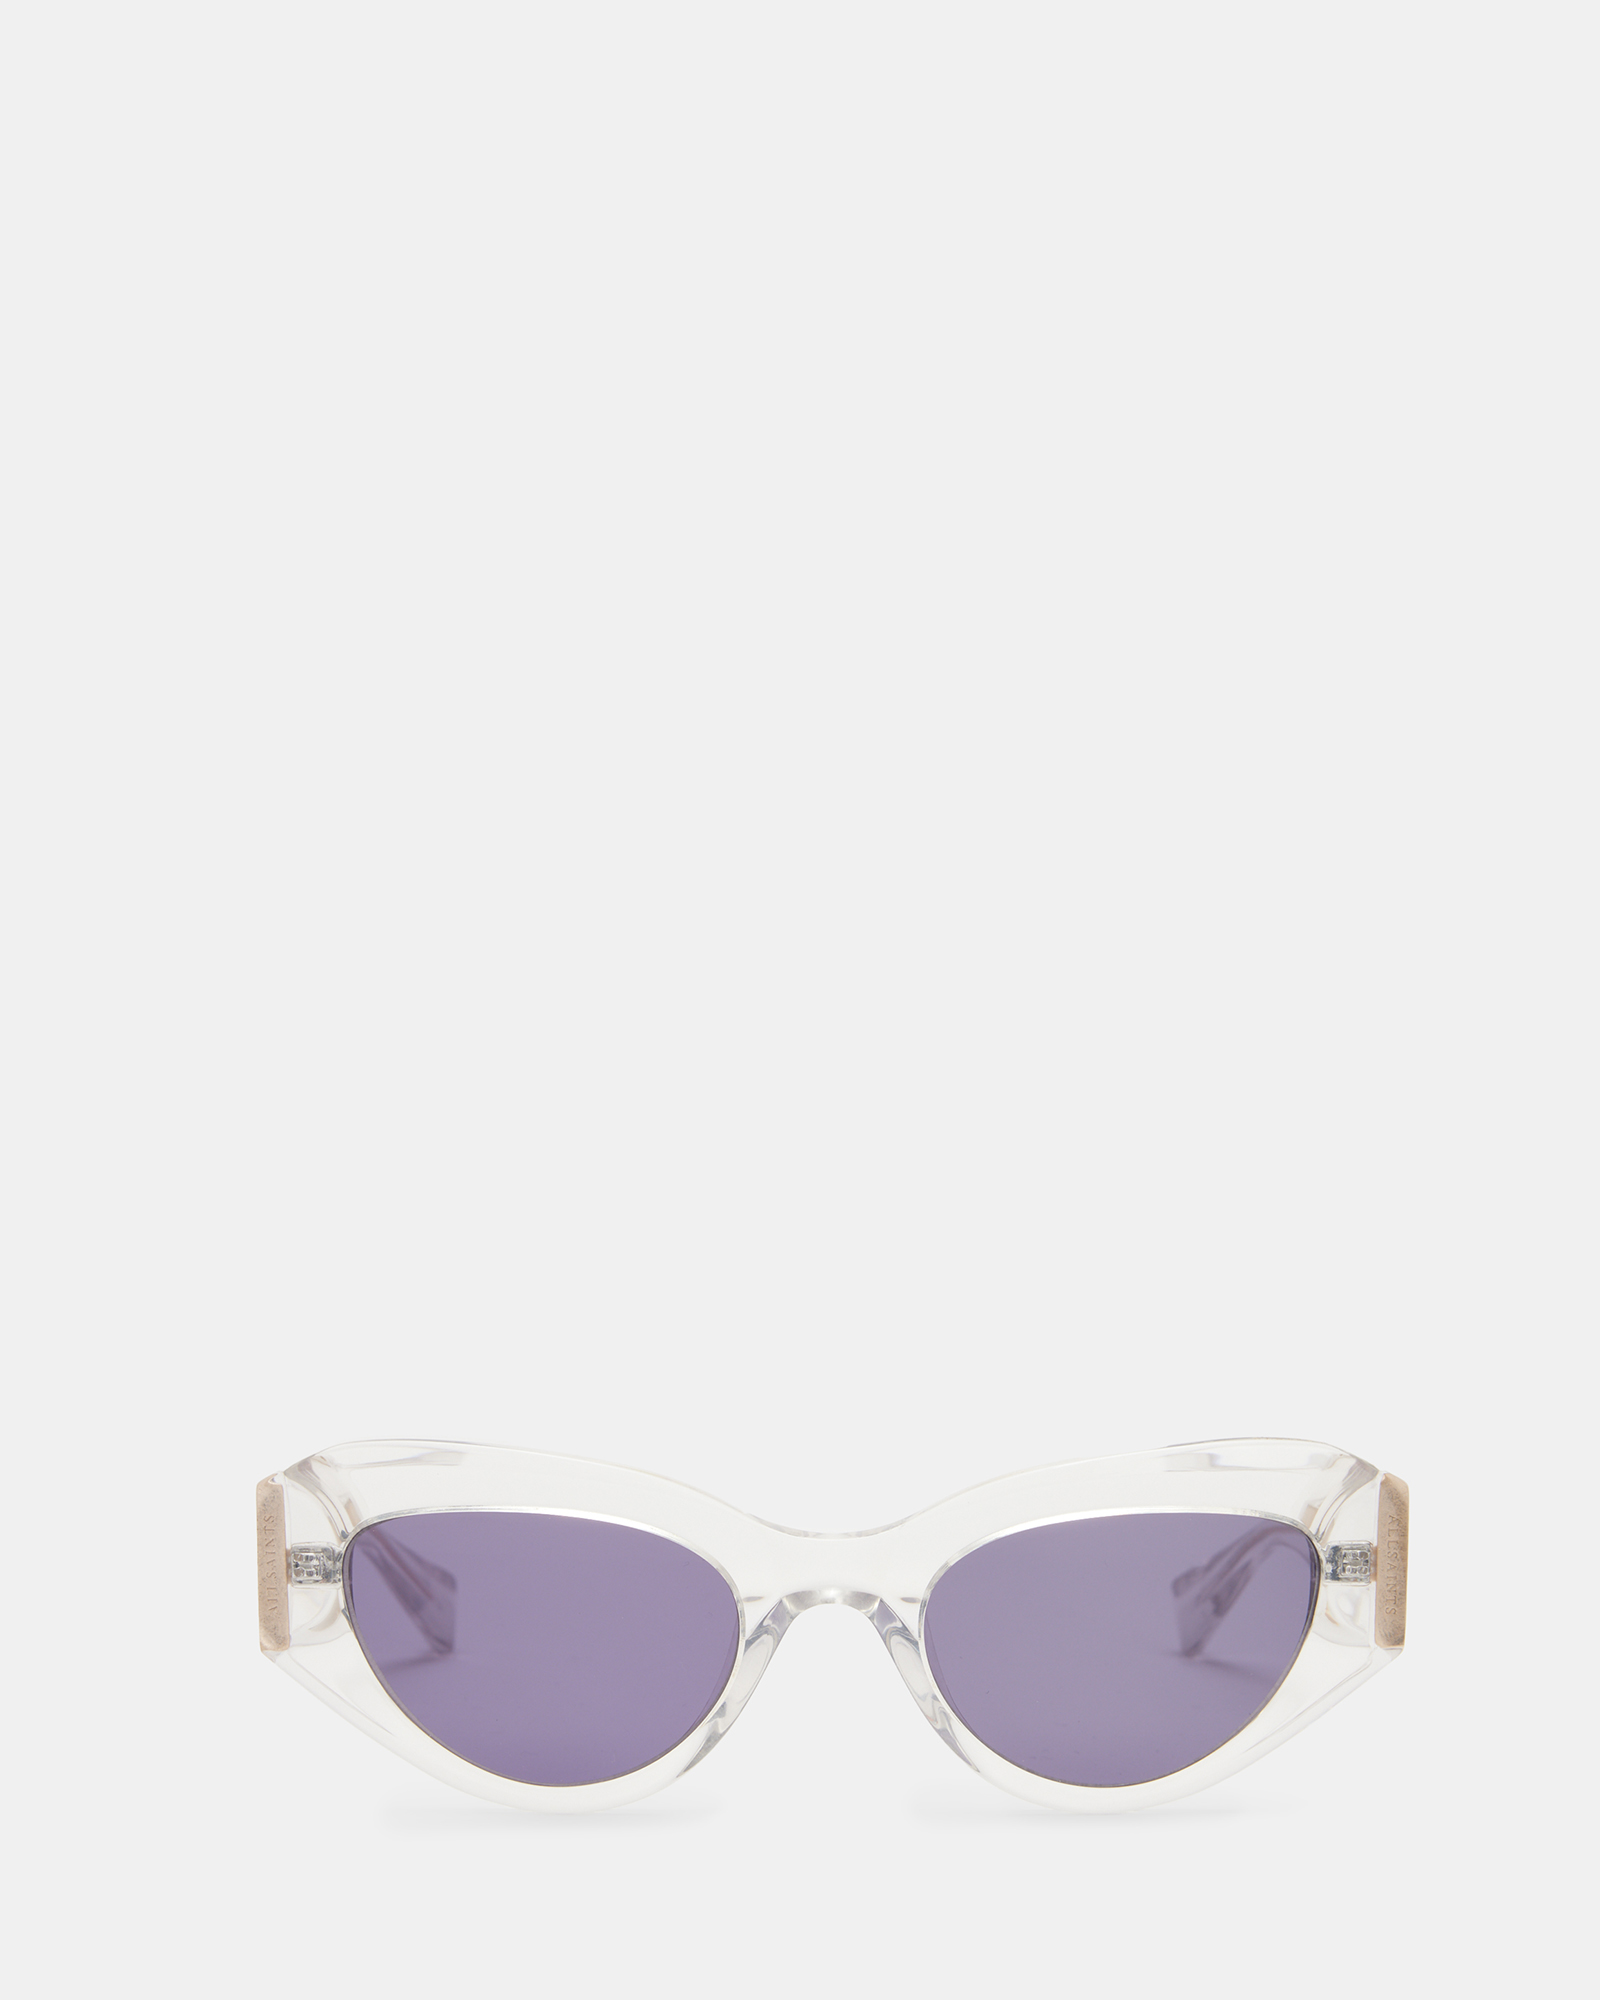 AllSaints Calypso Bevelled Cat Eye Sunglasses,, Clear